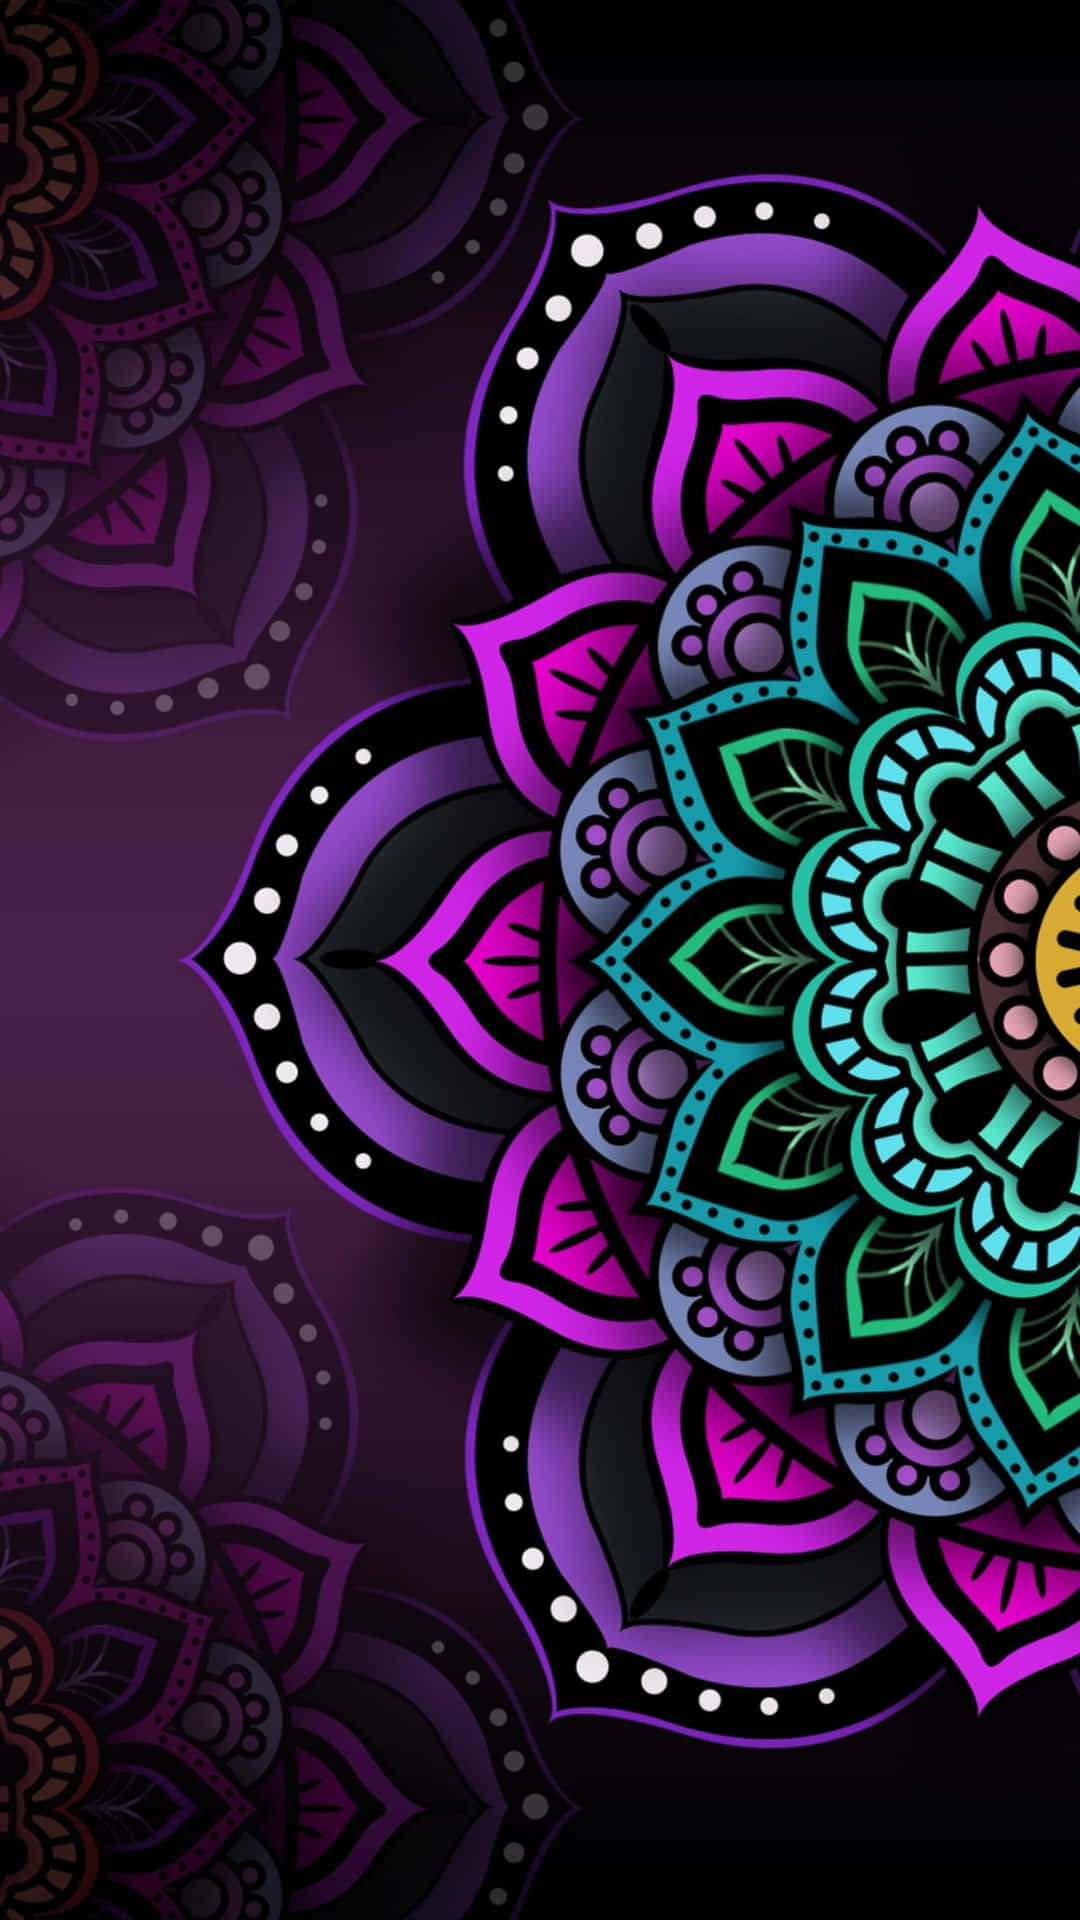 Download Creative Mandala Art Drawing On Black Background | Wallpapers.com